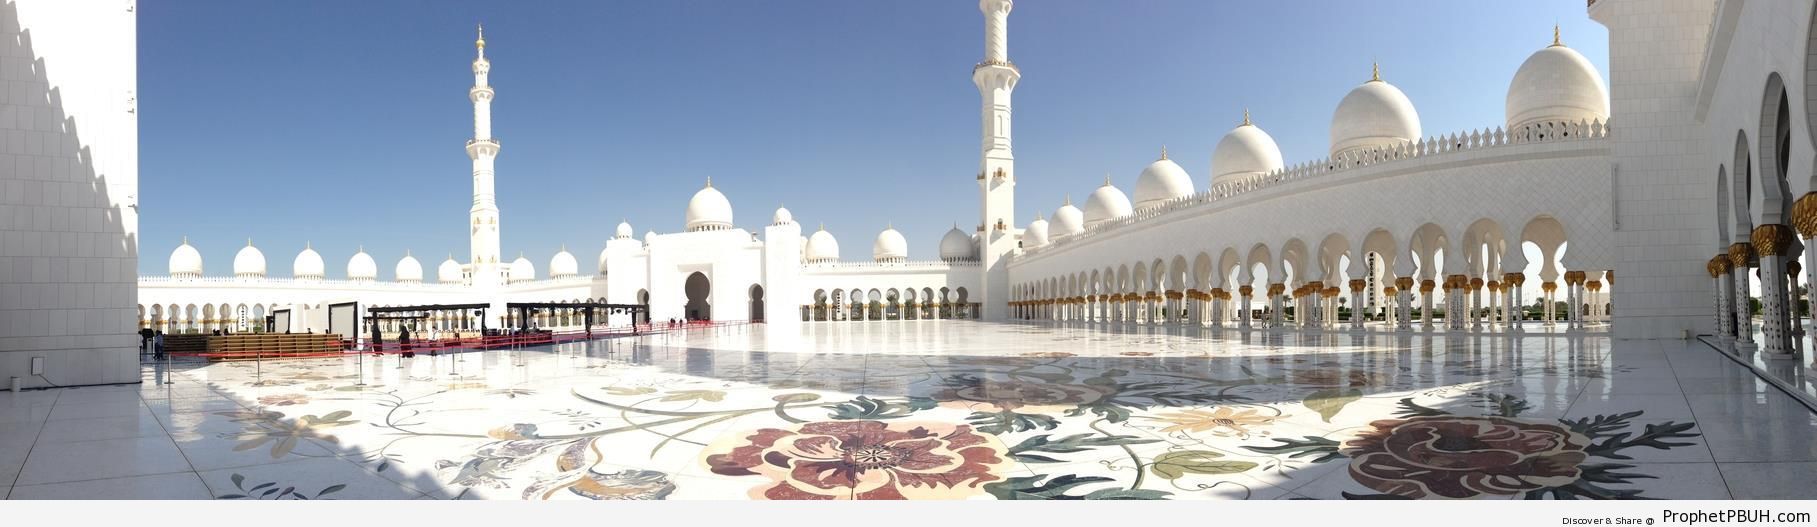 Panorama of Sheikh Zayed Grand Mosque (Abu Dhabi, UAE) - Abu Dhabi, United Arab Emirates